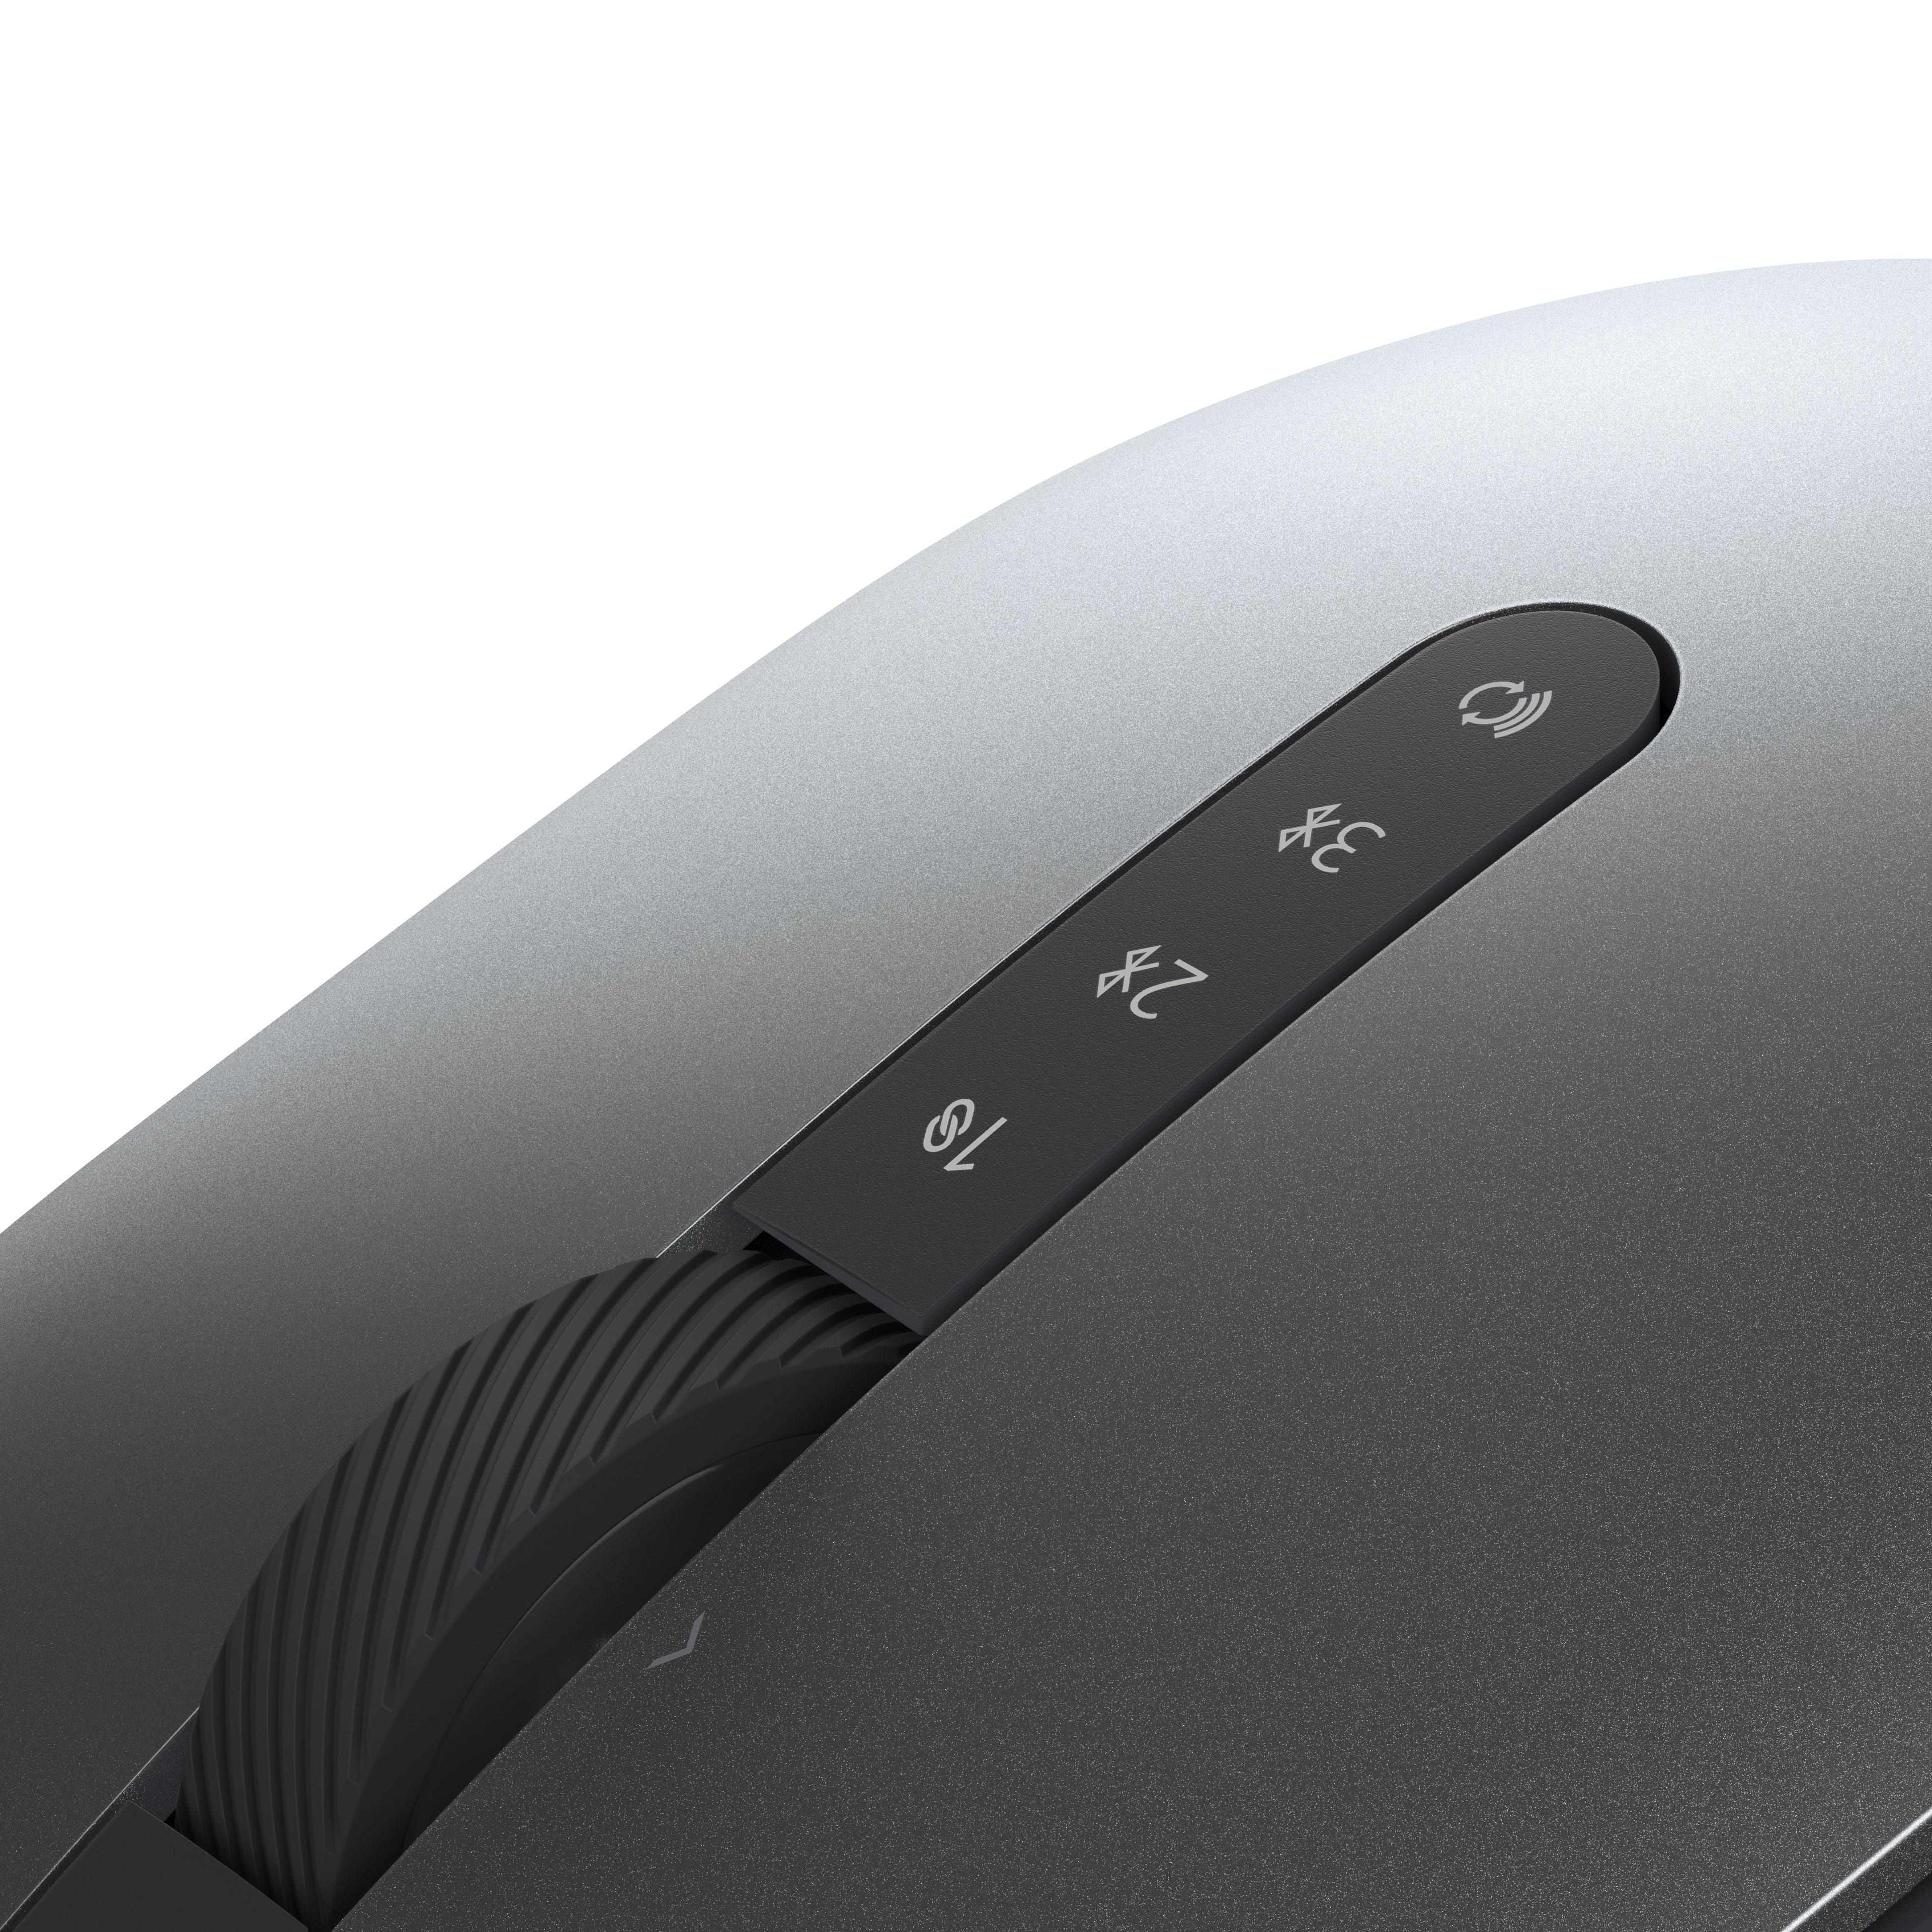 Dell Multi-Device Wireless Mouse